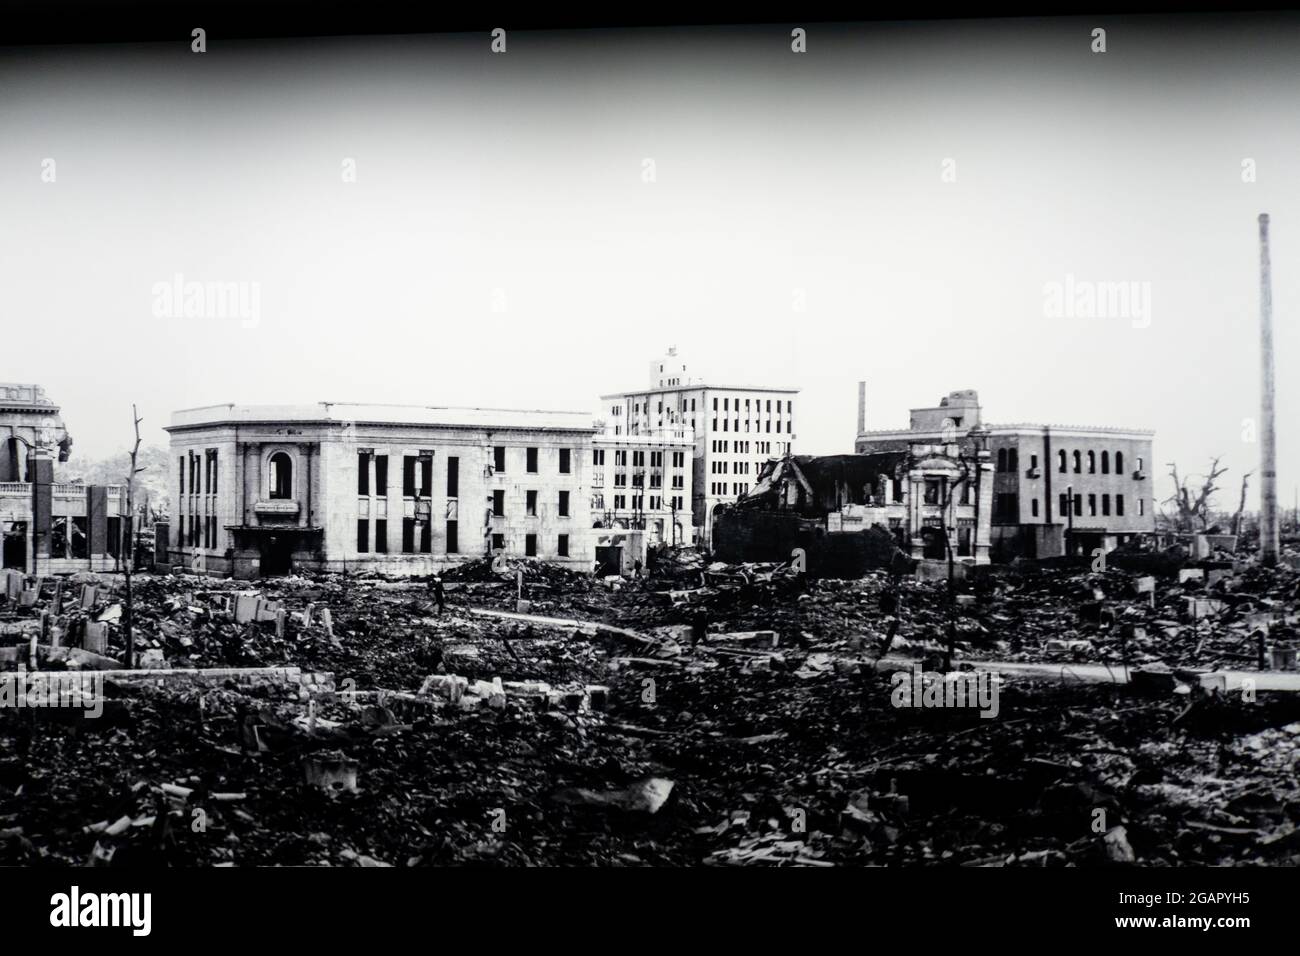 Hiroshima, Japan, 31/10/19.Foto der zerstörten Stadt Hiroshima nach dem Atombombenanschlag am 6. August 1945, Ausstellung des Friedensdenkmalmuseums von Hiroshima Stockfoto